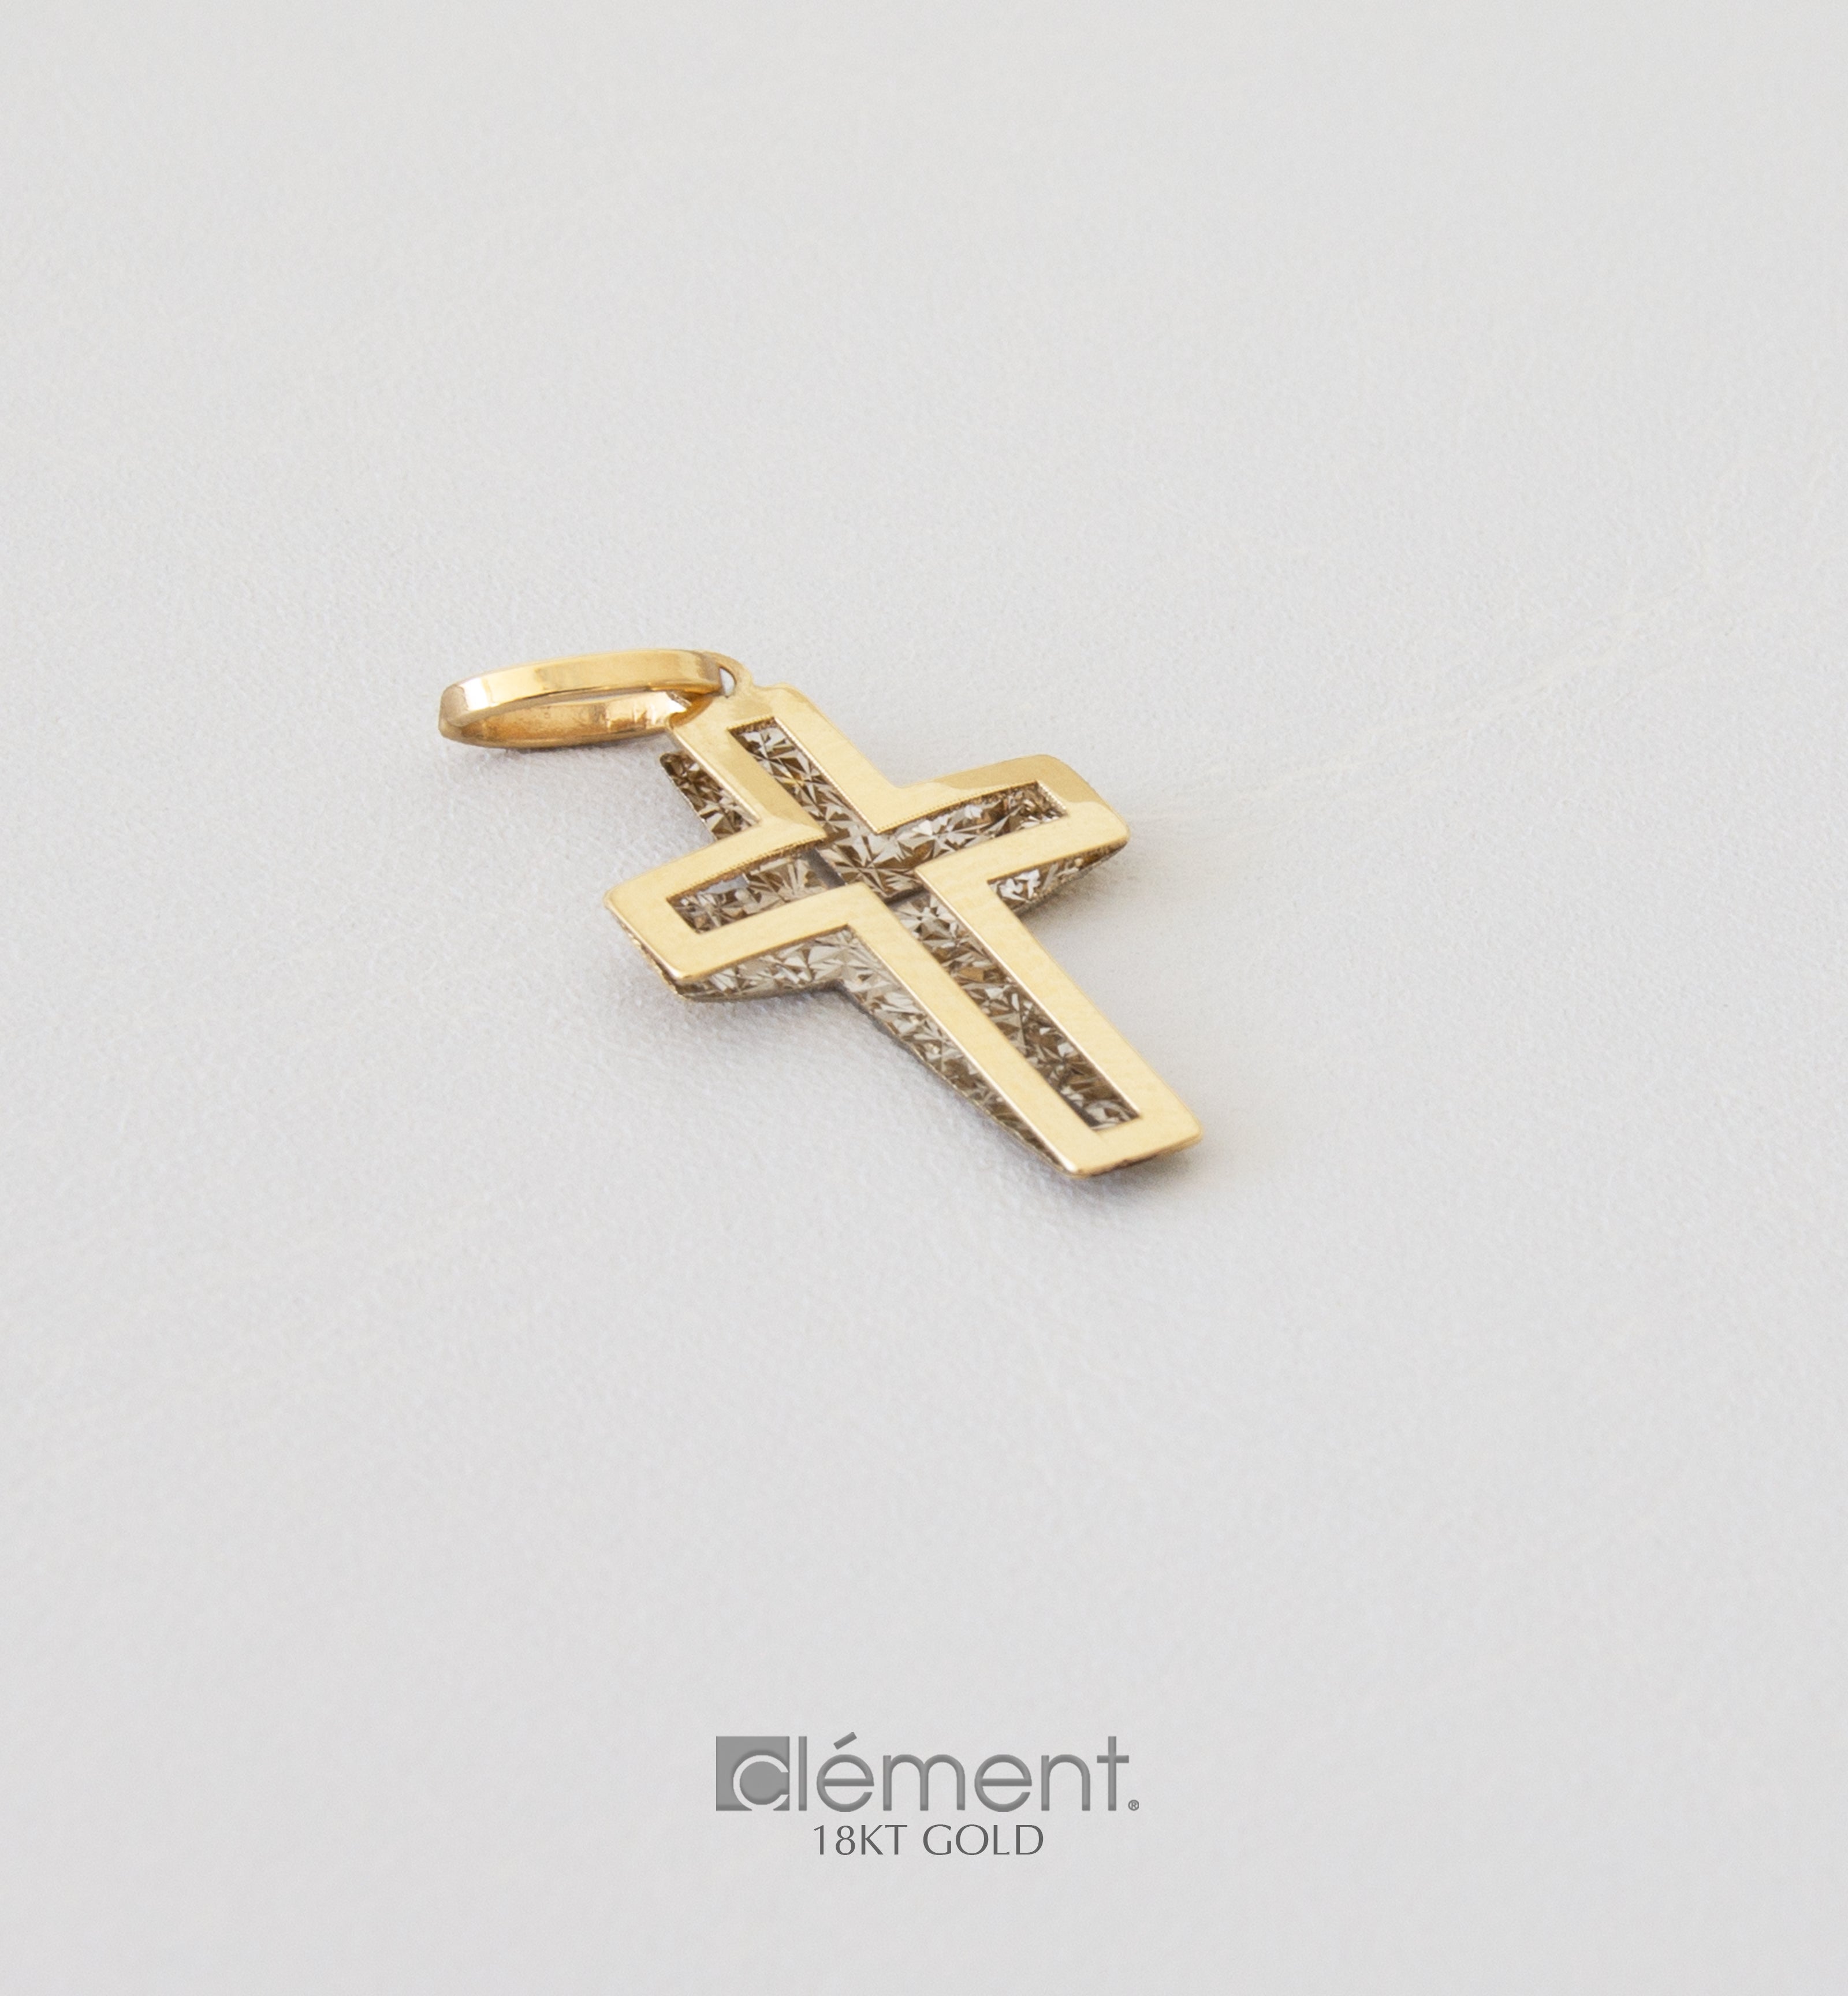 18ct Gold Two-Tone Cross Pendant